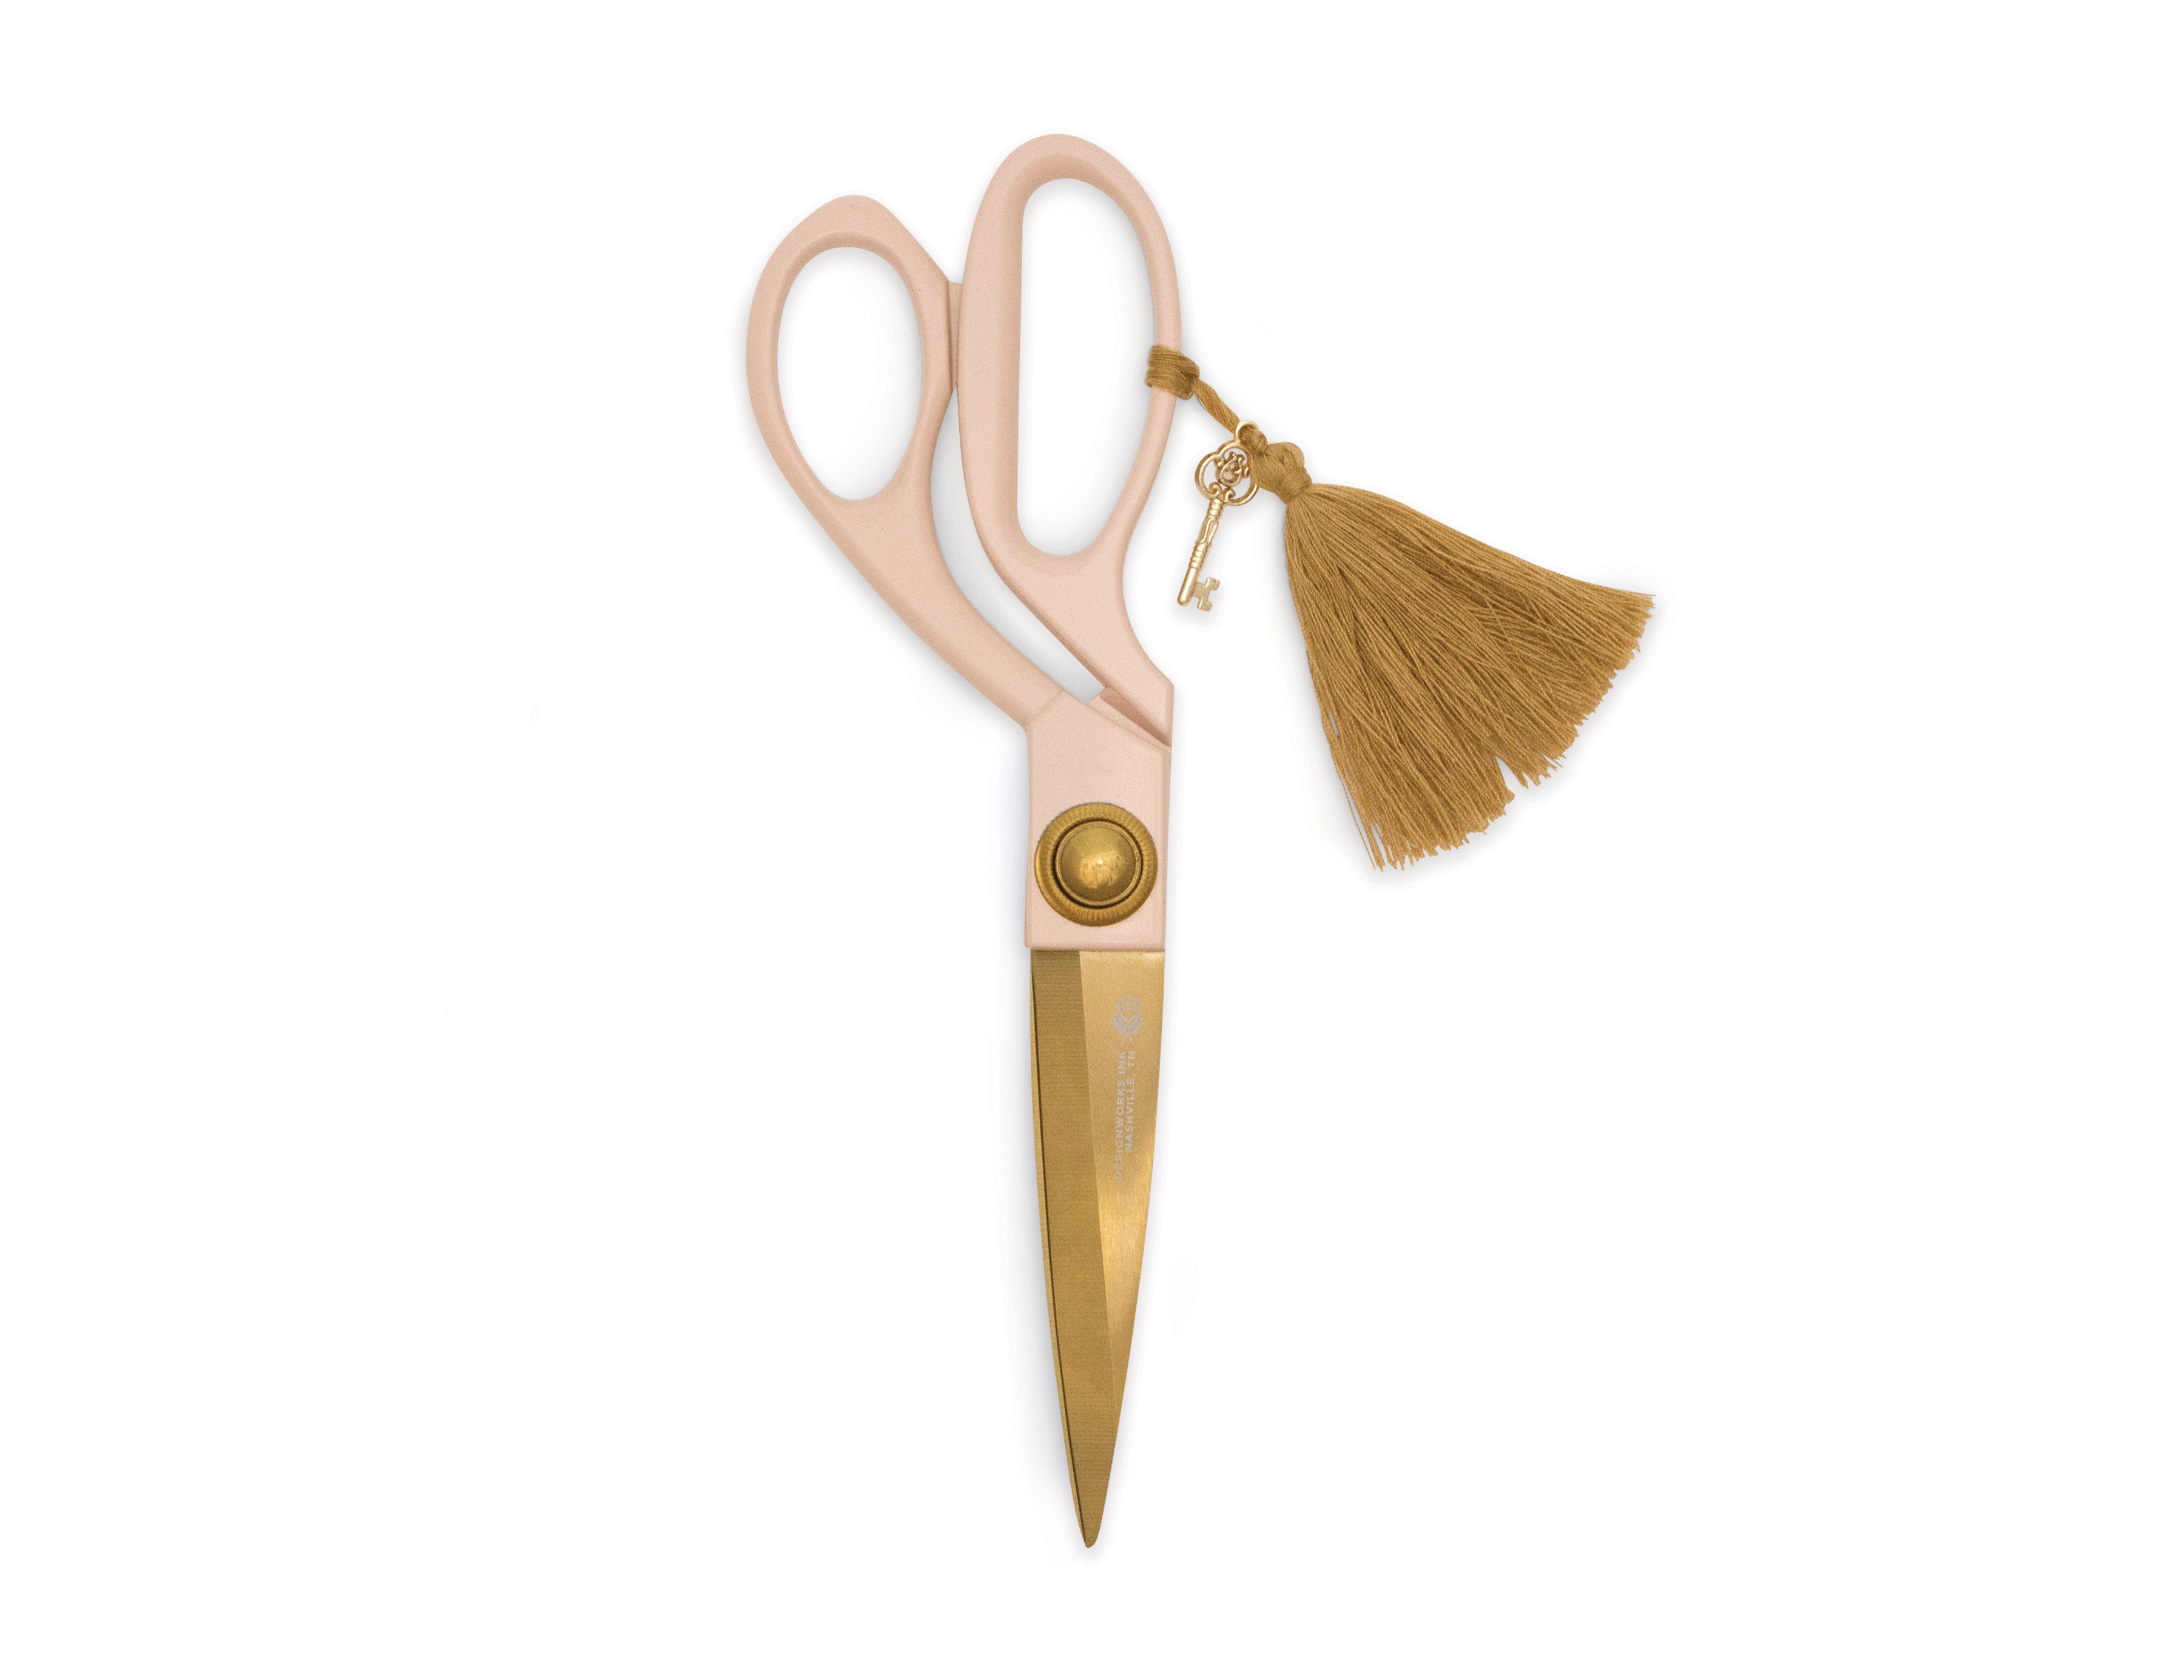 Blush scissors with golden Tassel & Key Charm by Designworks.